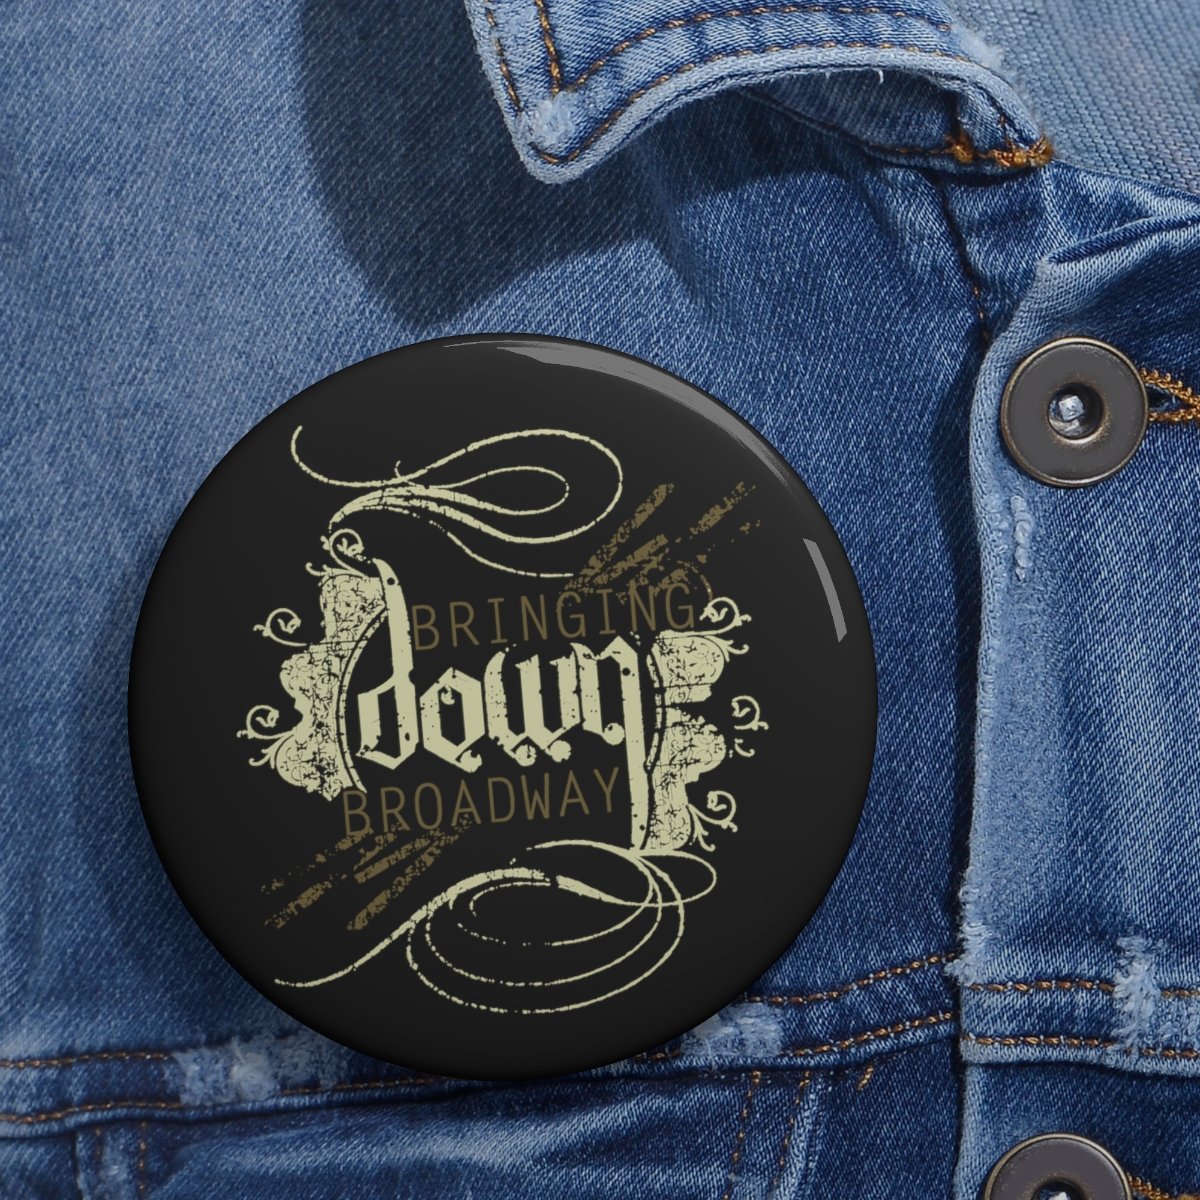 Bringing Down Broadway – Swirly Logo Pin Buttons